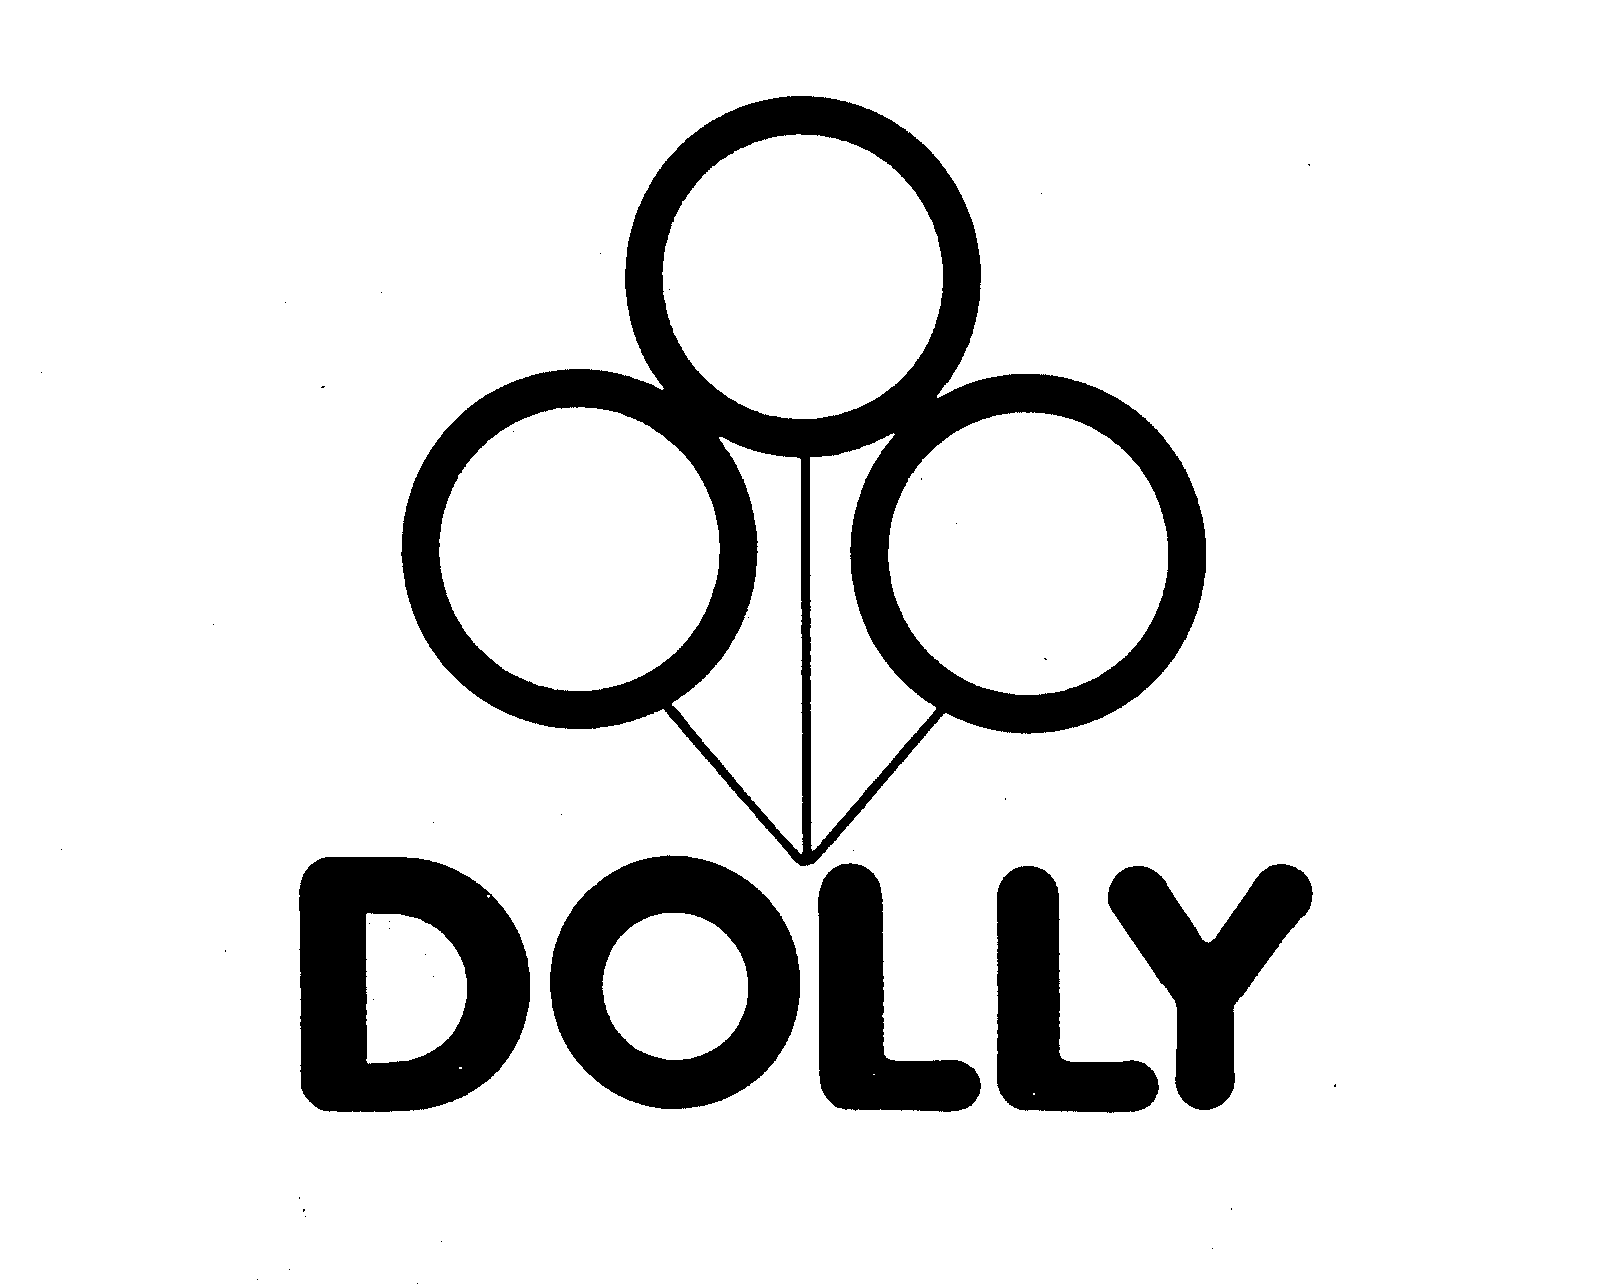 Dolly Inc